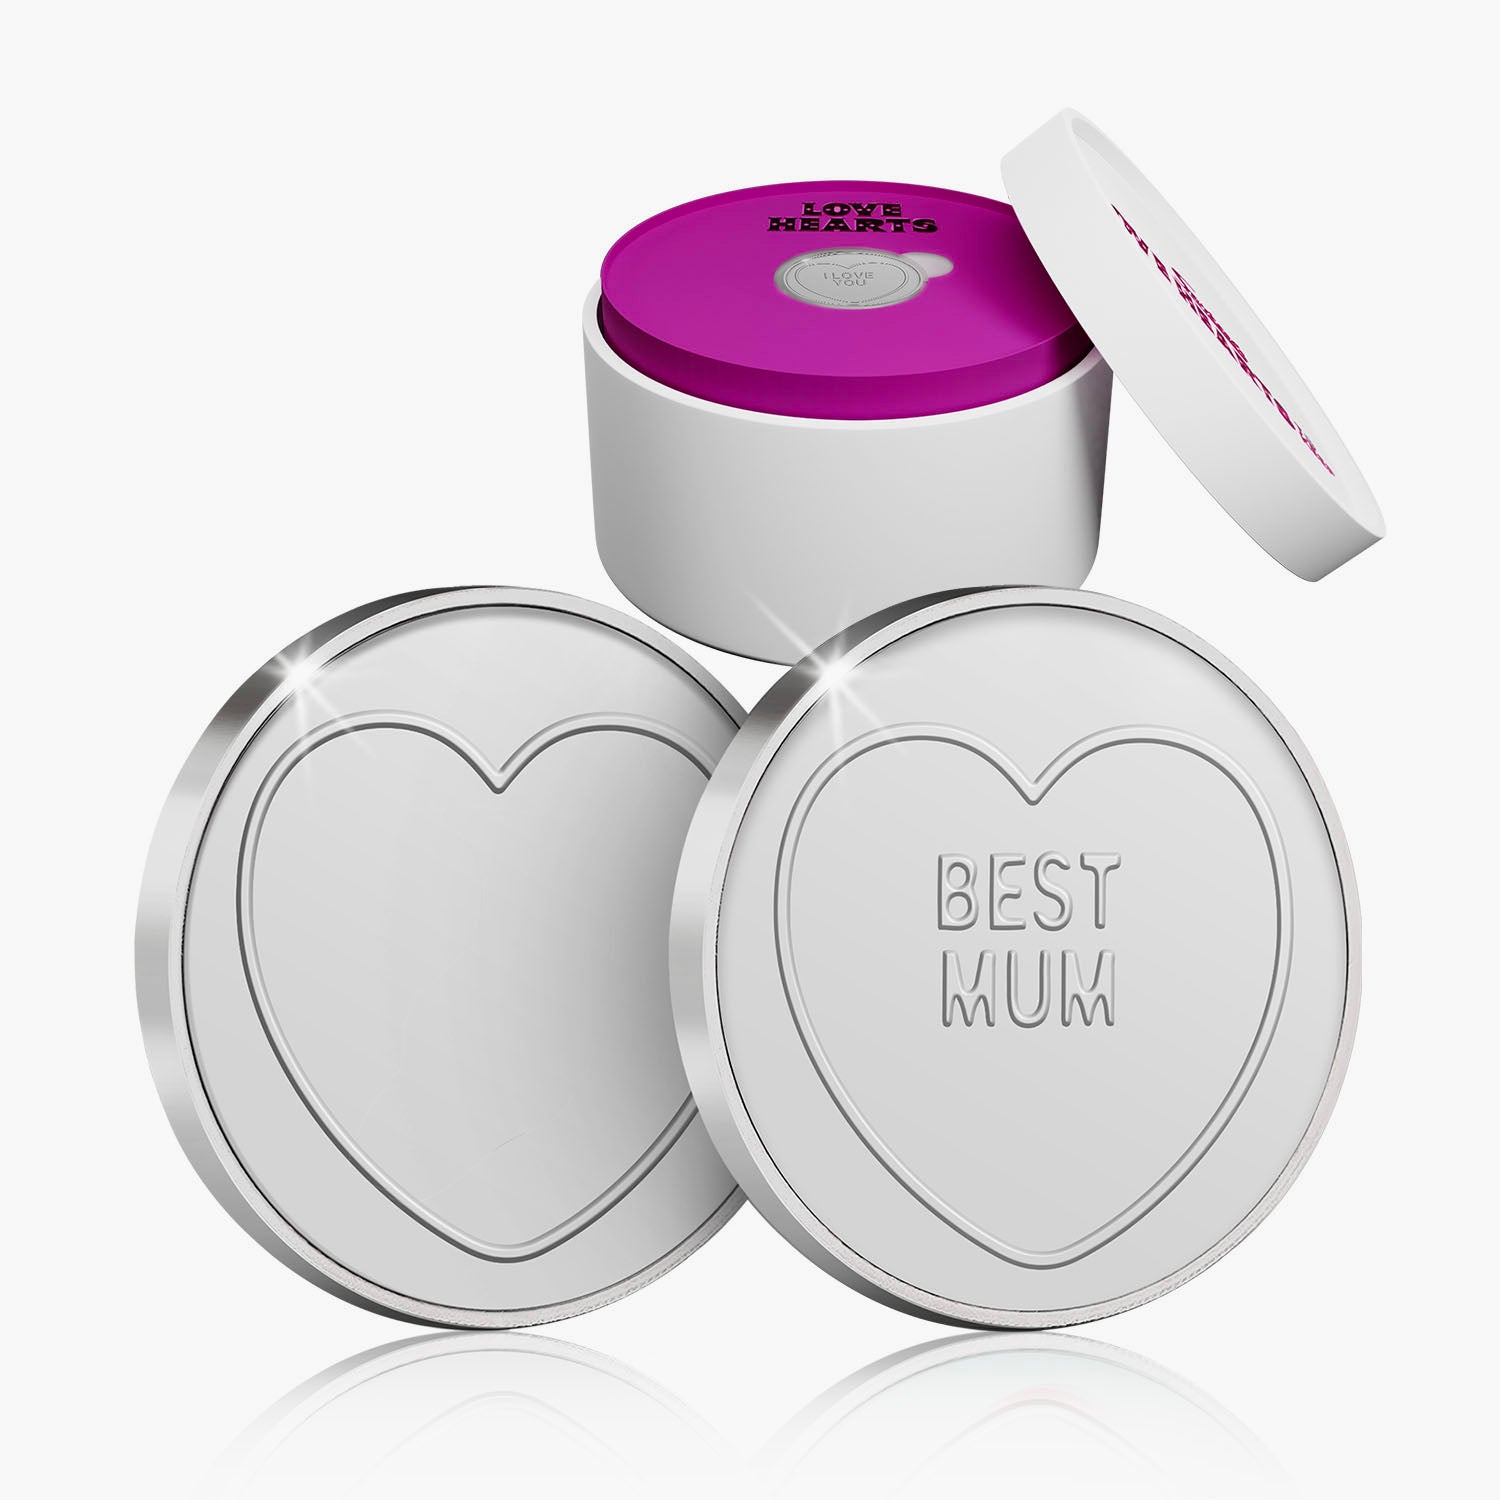 Best Mum Silver Plated Love Heart in Presentation Box